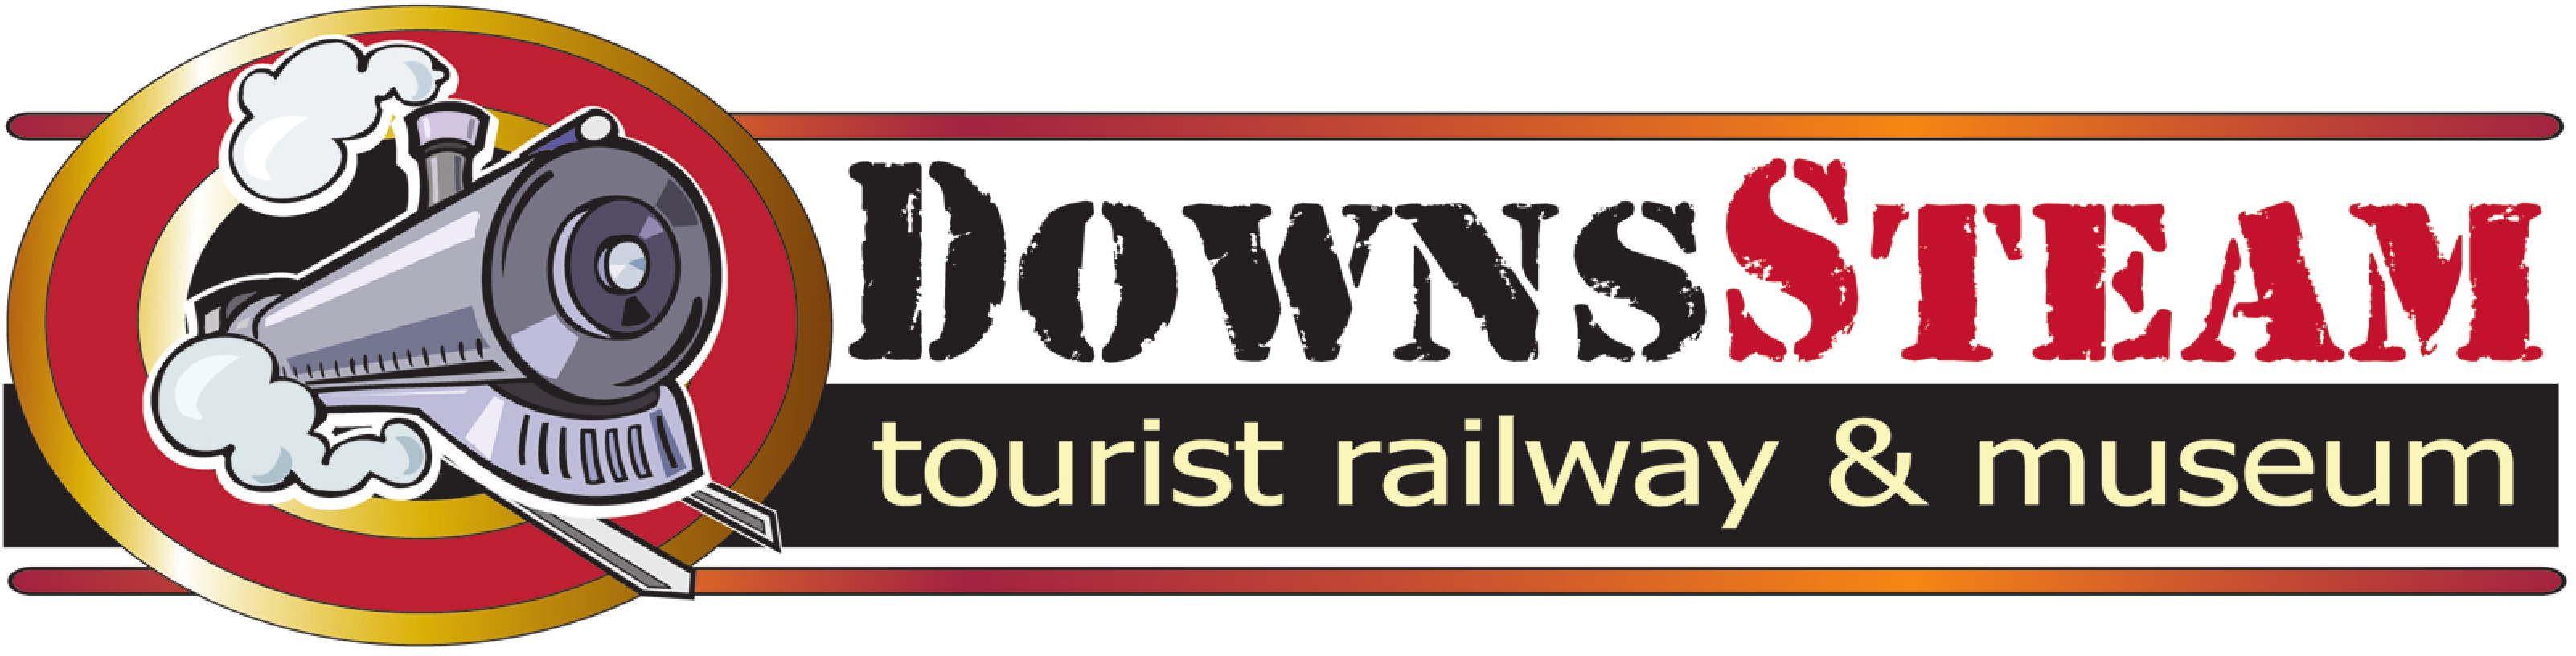 DownsSteam Tourist Railway and Museum